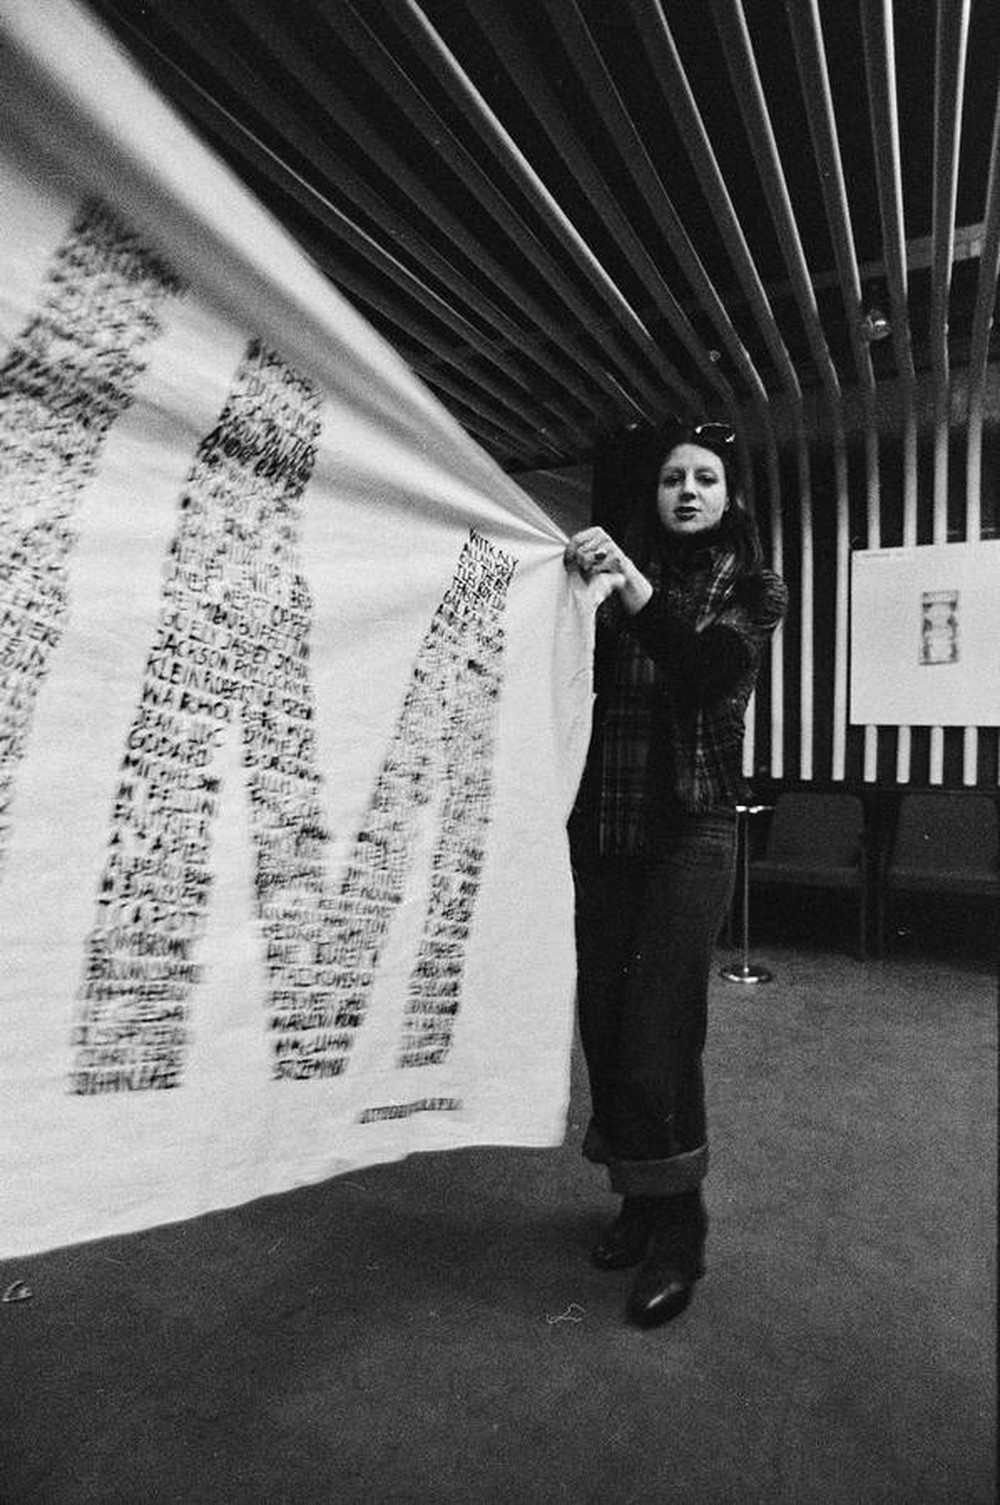 Remont Gallery, 1st International Visual Text Congress, 1977